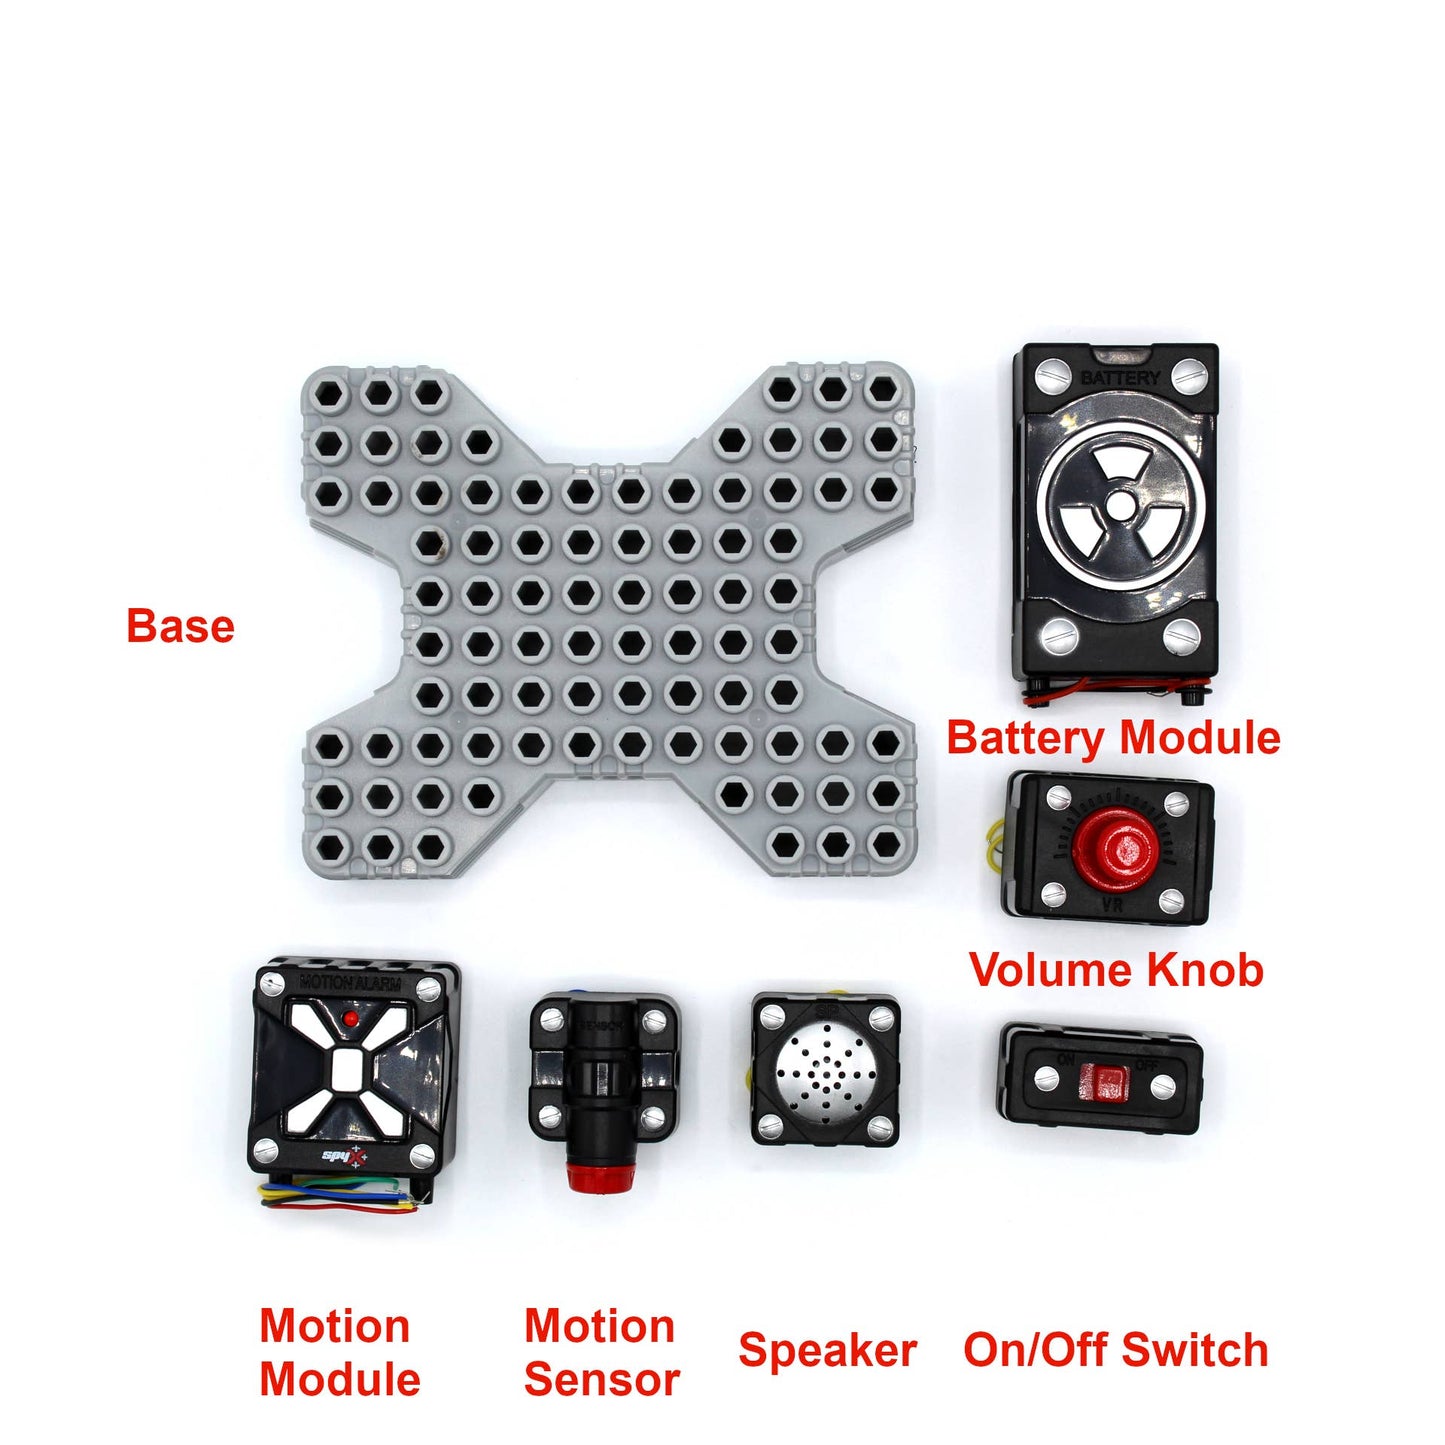 MukikiM - SpyX DIY Motion Alarm - Make Your Own Real Motion Sensor